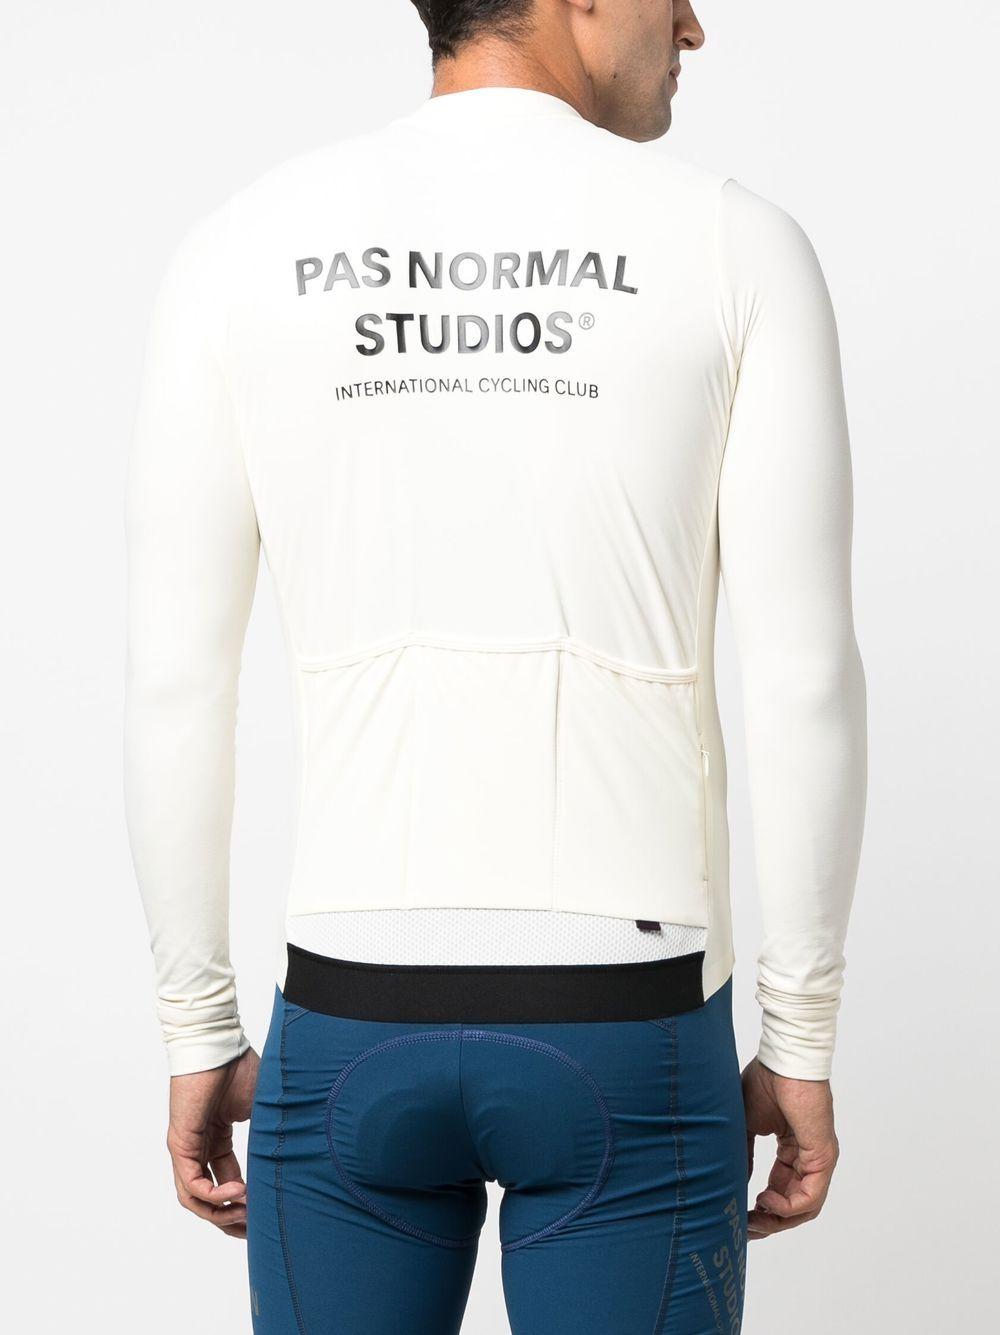 Pas Normal Studios Mechanism Long-sleeve Jersey in White for Men